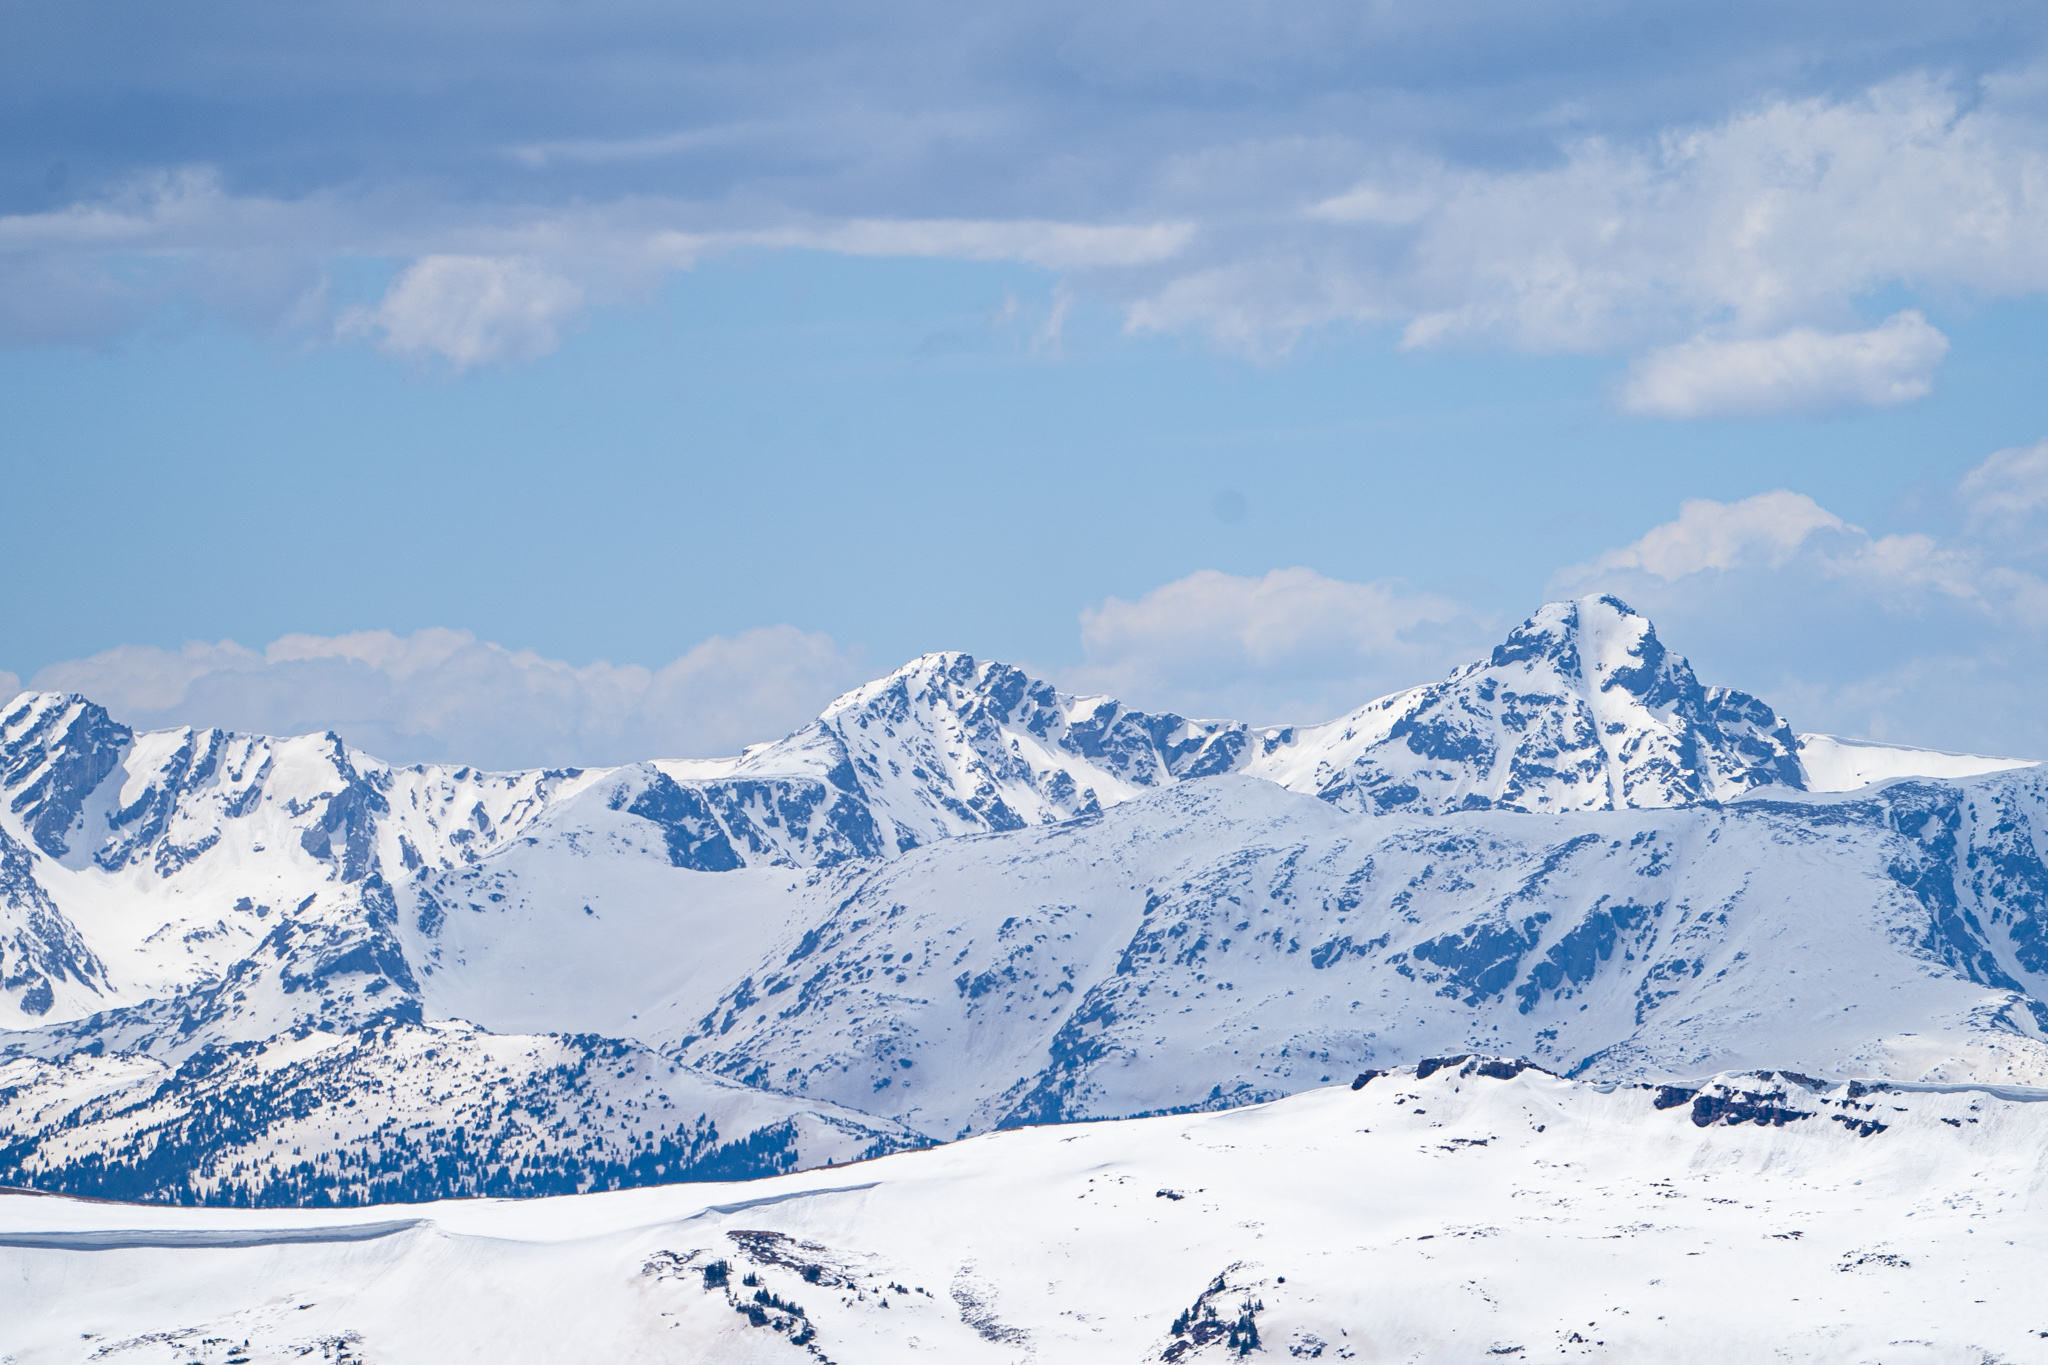 Peaks of the Breckenridge Ski Resort